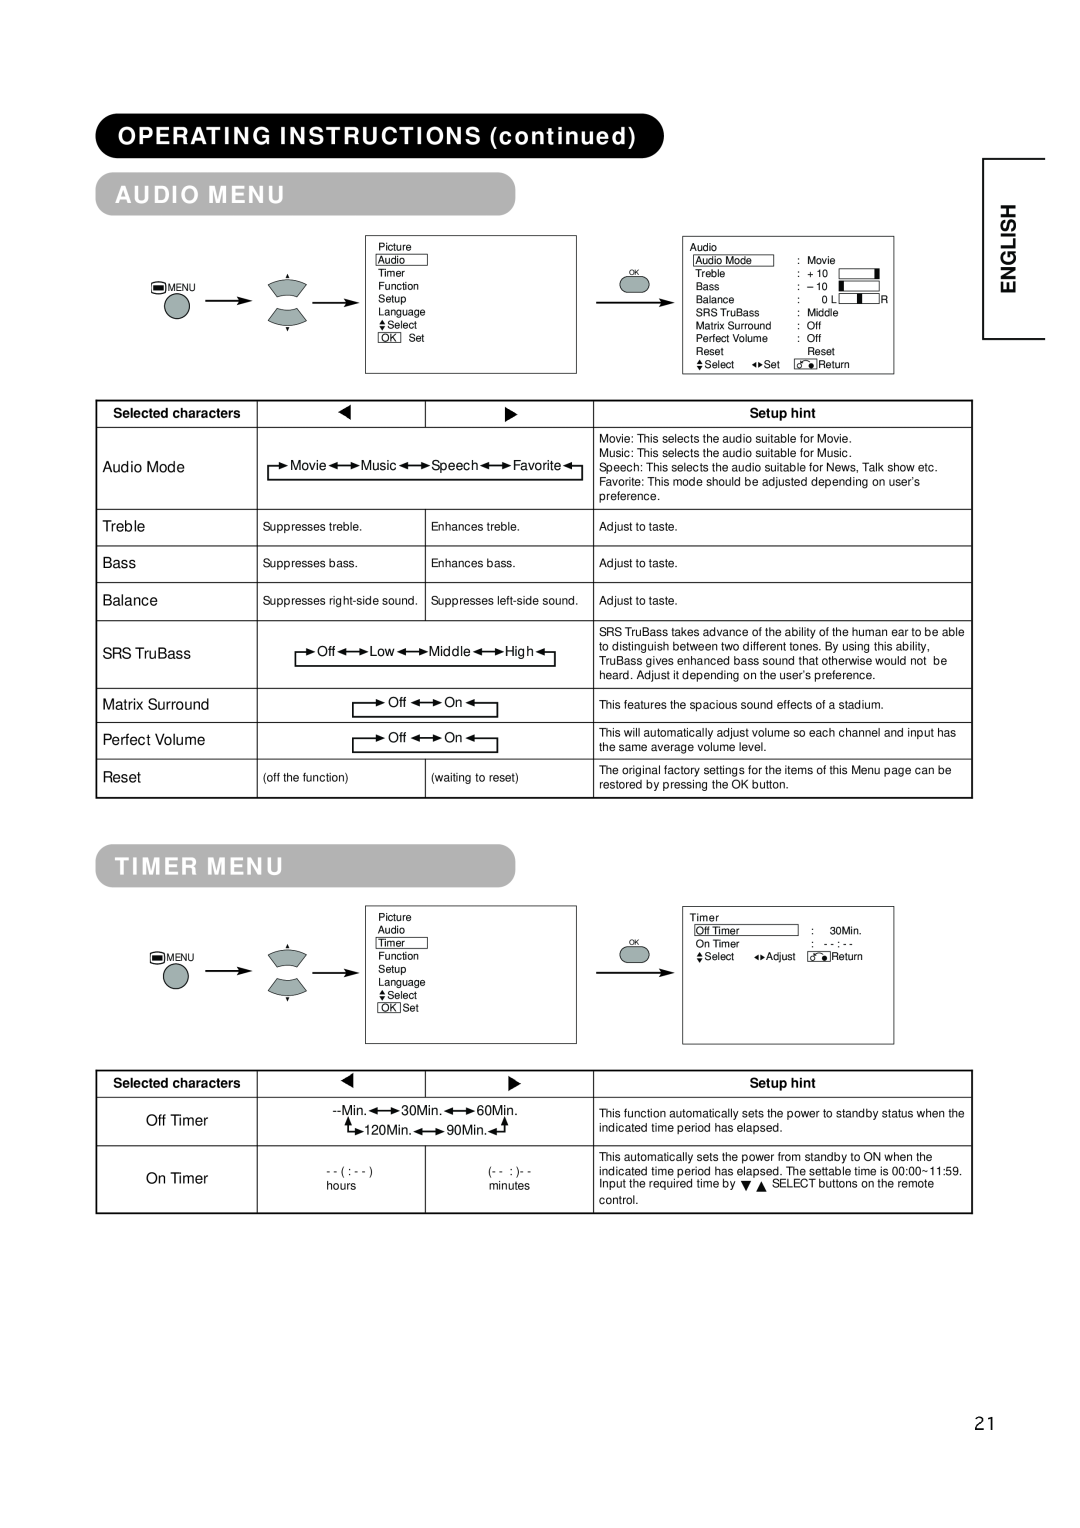 Hitachi PW1A user manual OPERATING INSTRUCTIONS continued AUDIO MENU, Timer Menu, English 